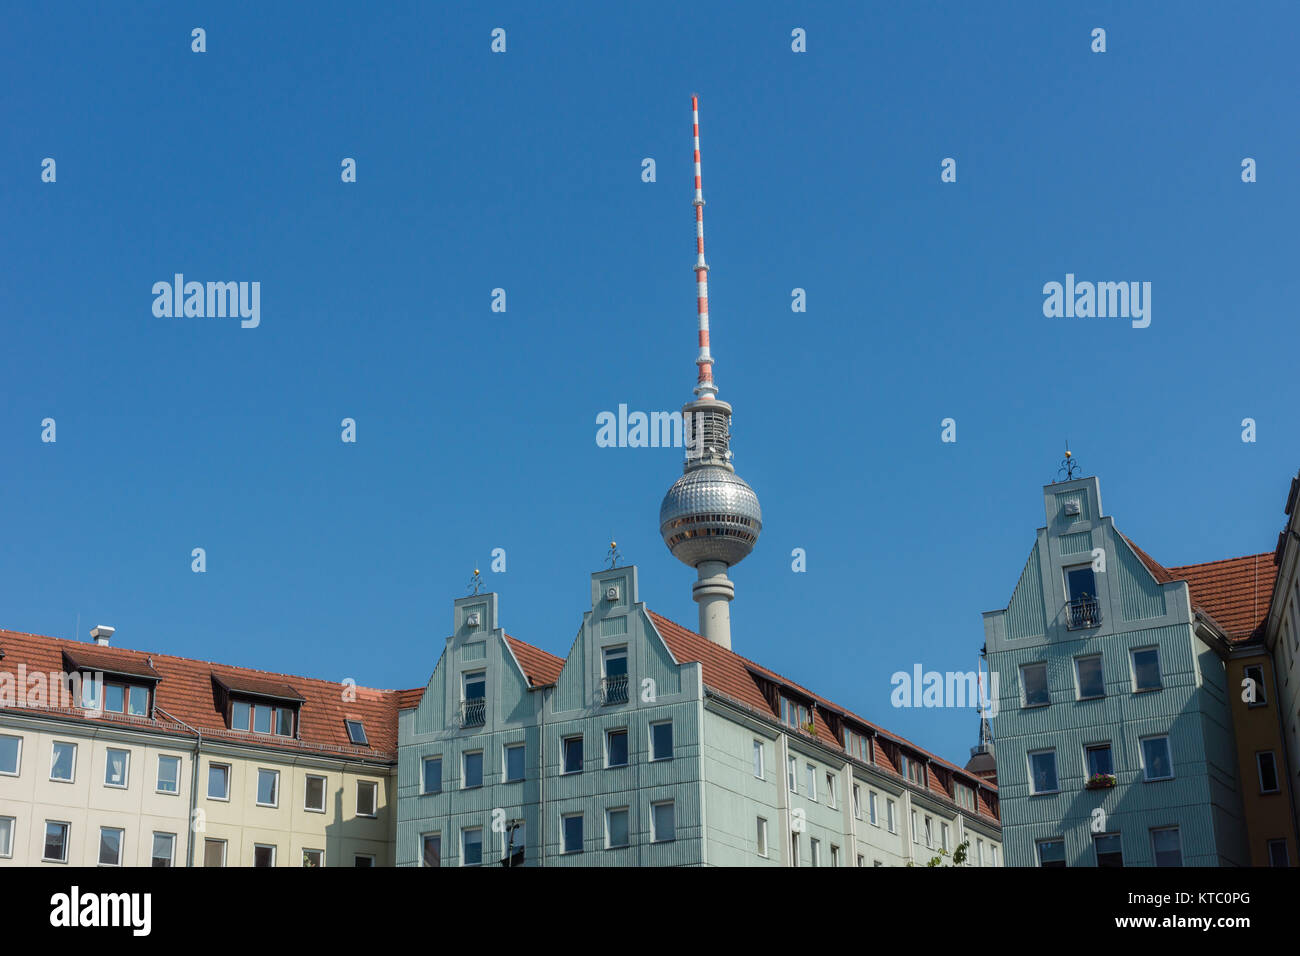 Der Berliner Funkturm am Alexanderplatz Foto Stock